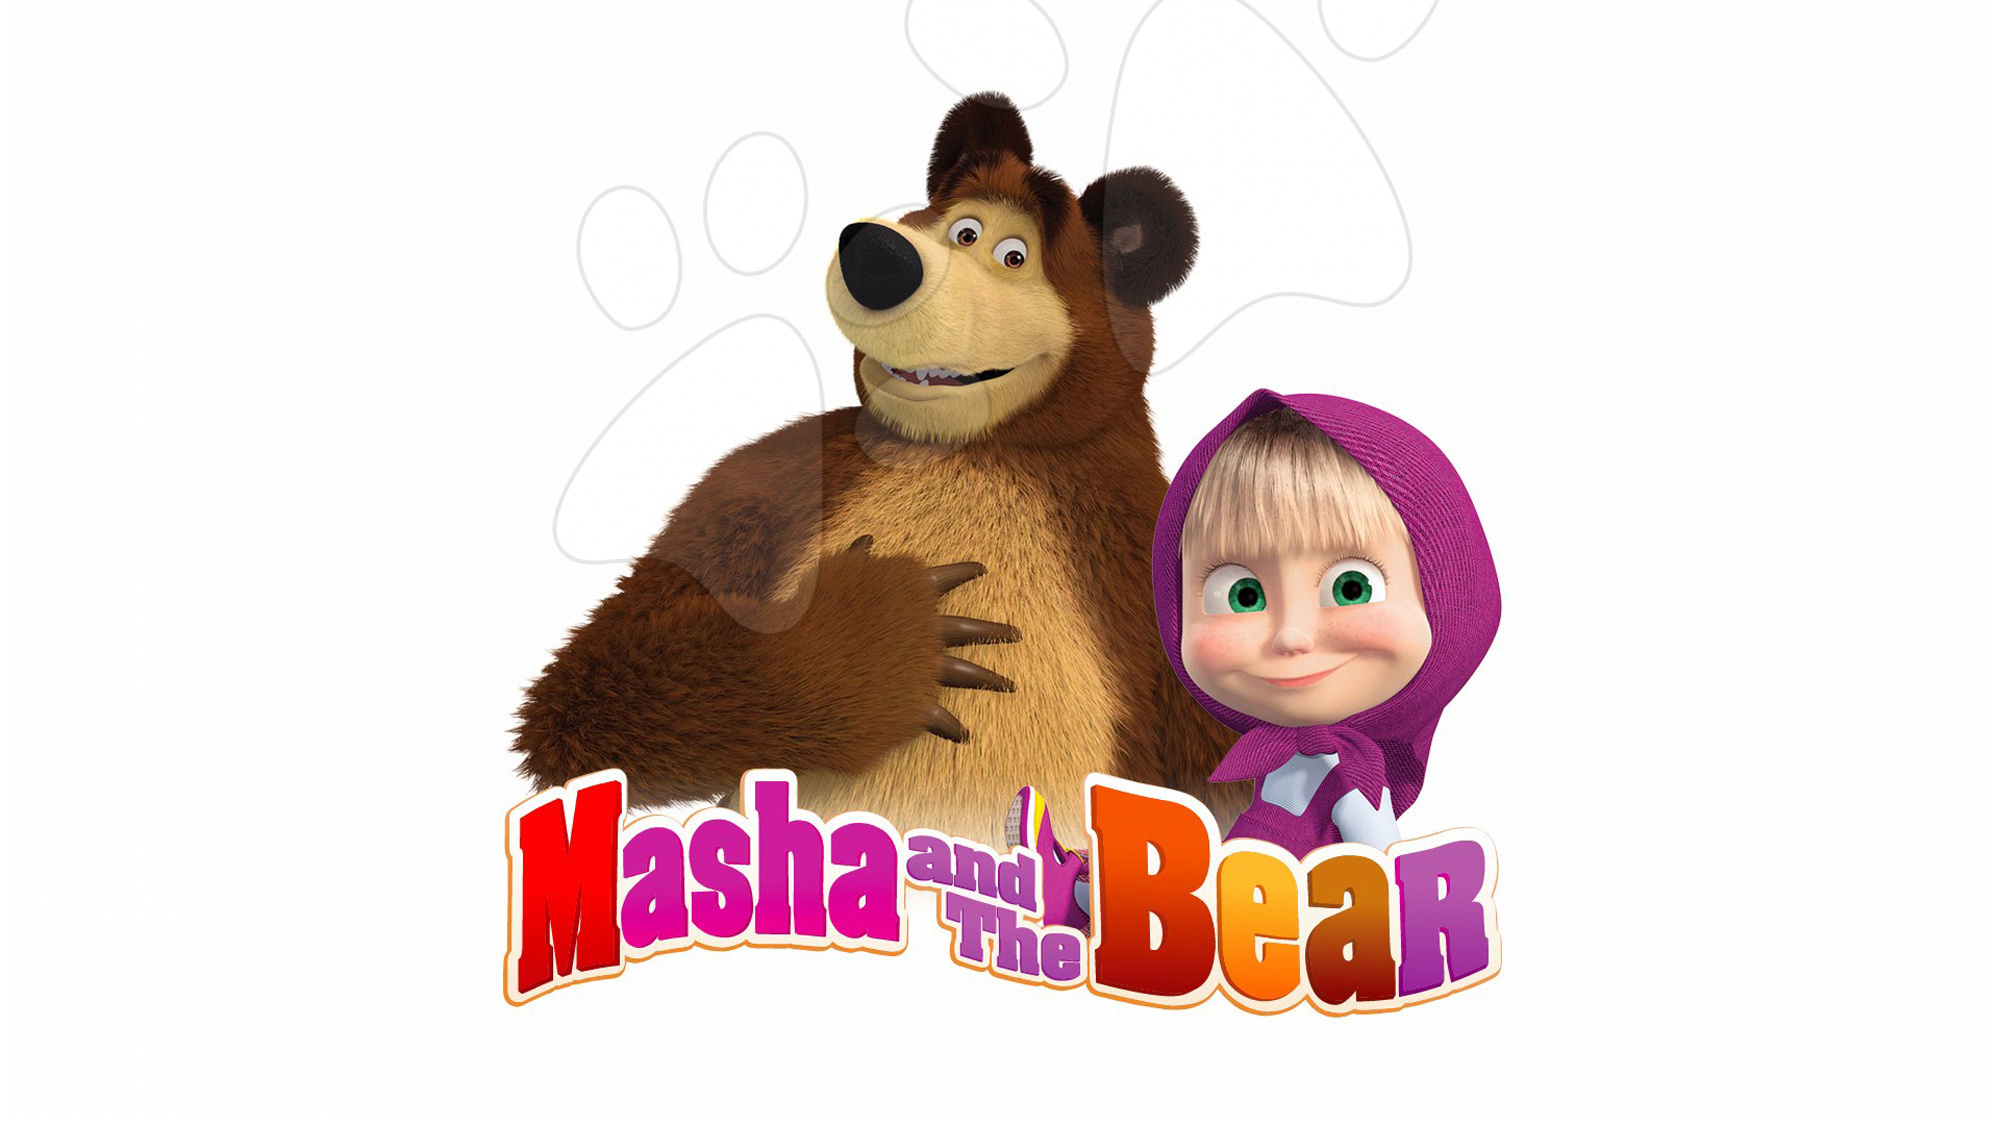 Маша и медведь remix. Маша и медведь (Masha and the Bear) - репетиция оркестра. Маша и медведь картинки. Маша и медведь картинки для детей. Маша и медведь медведь.